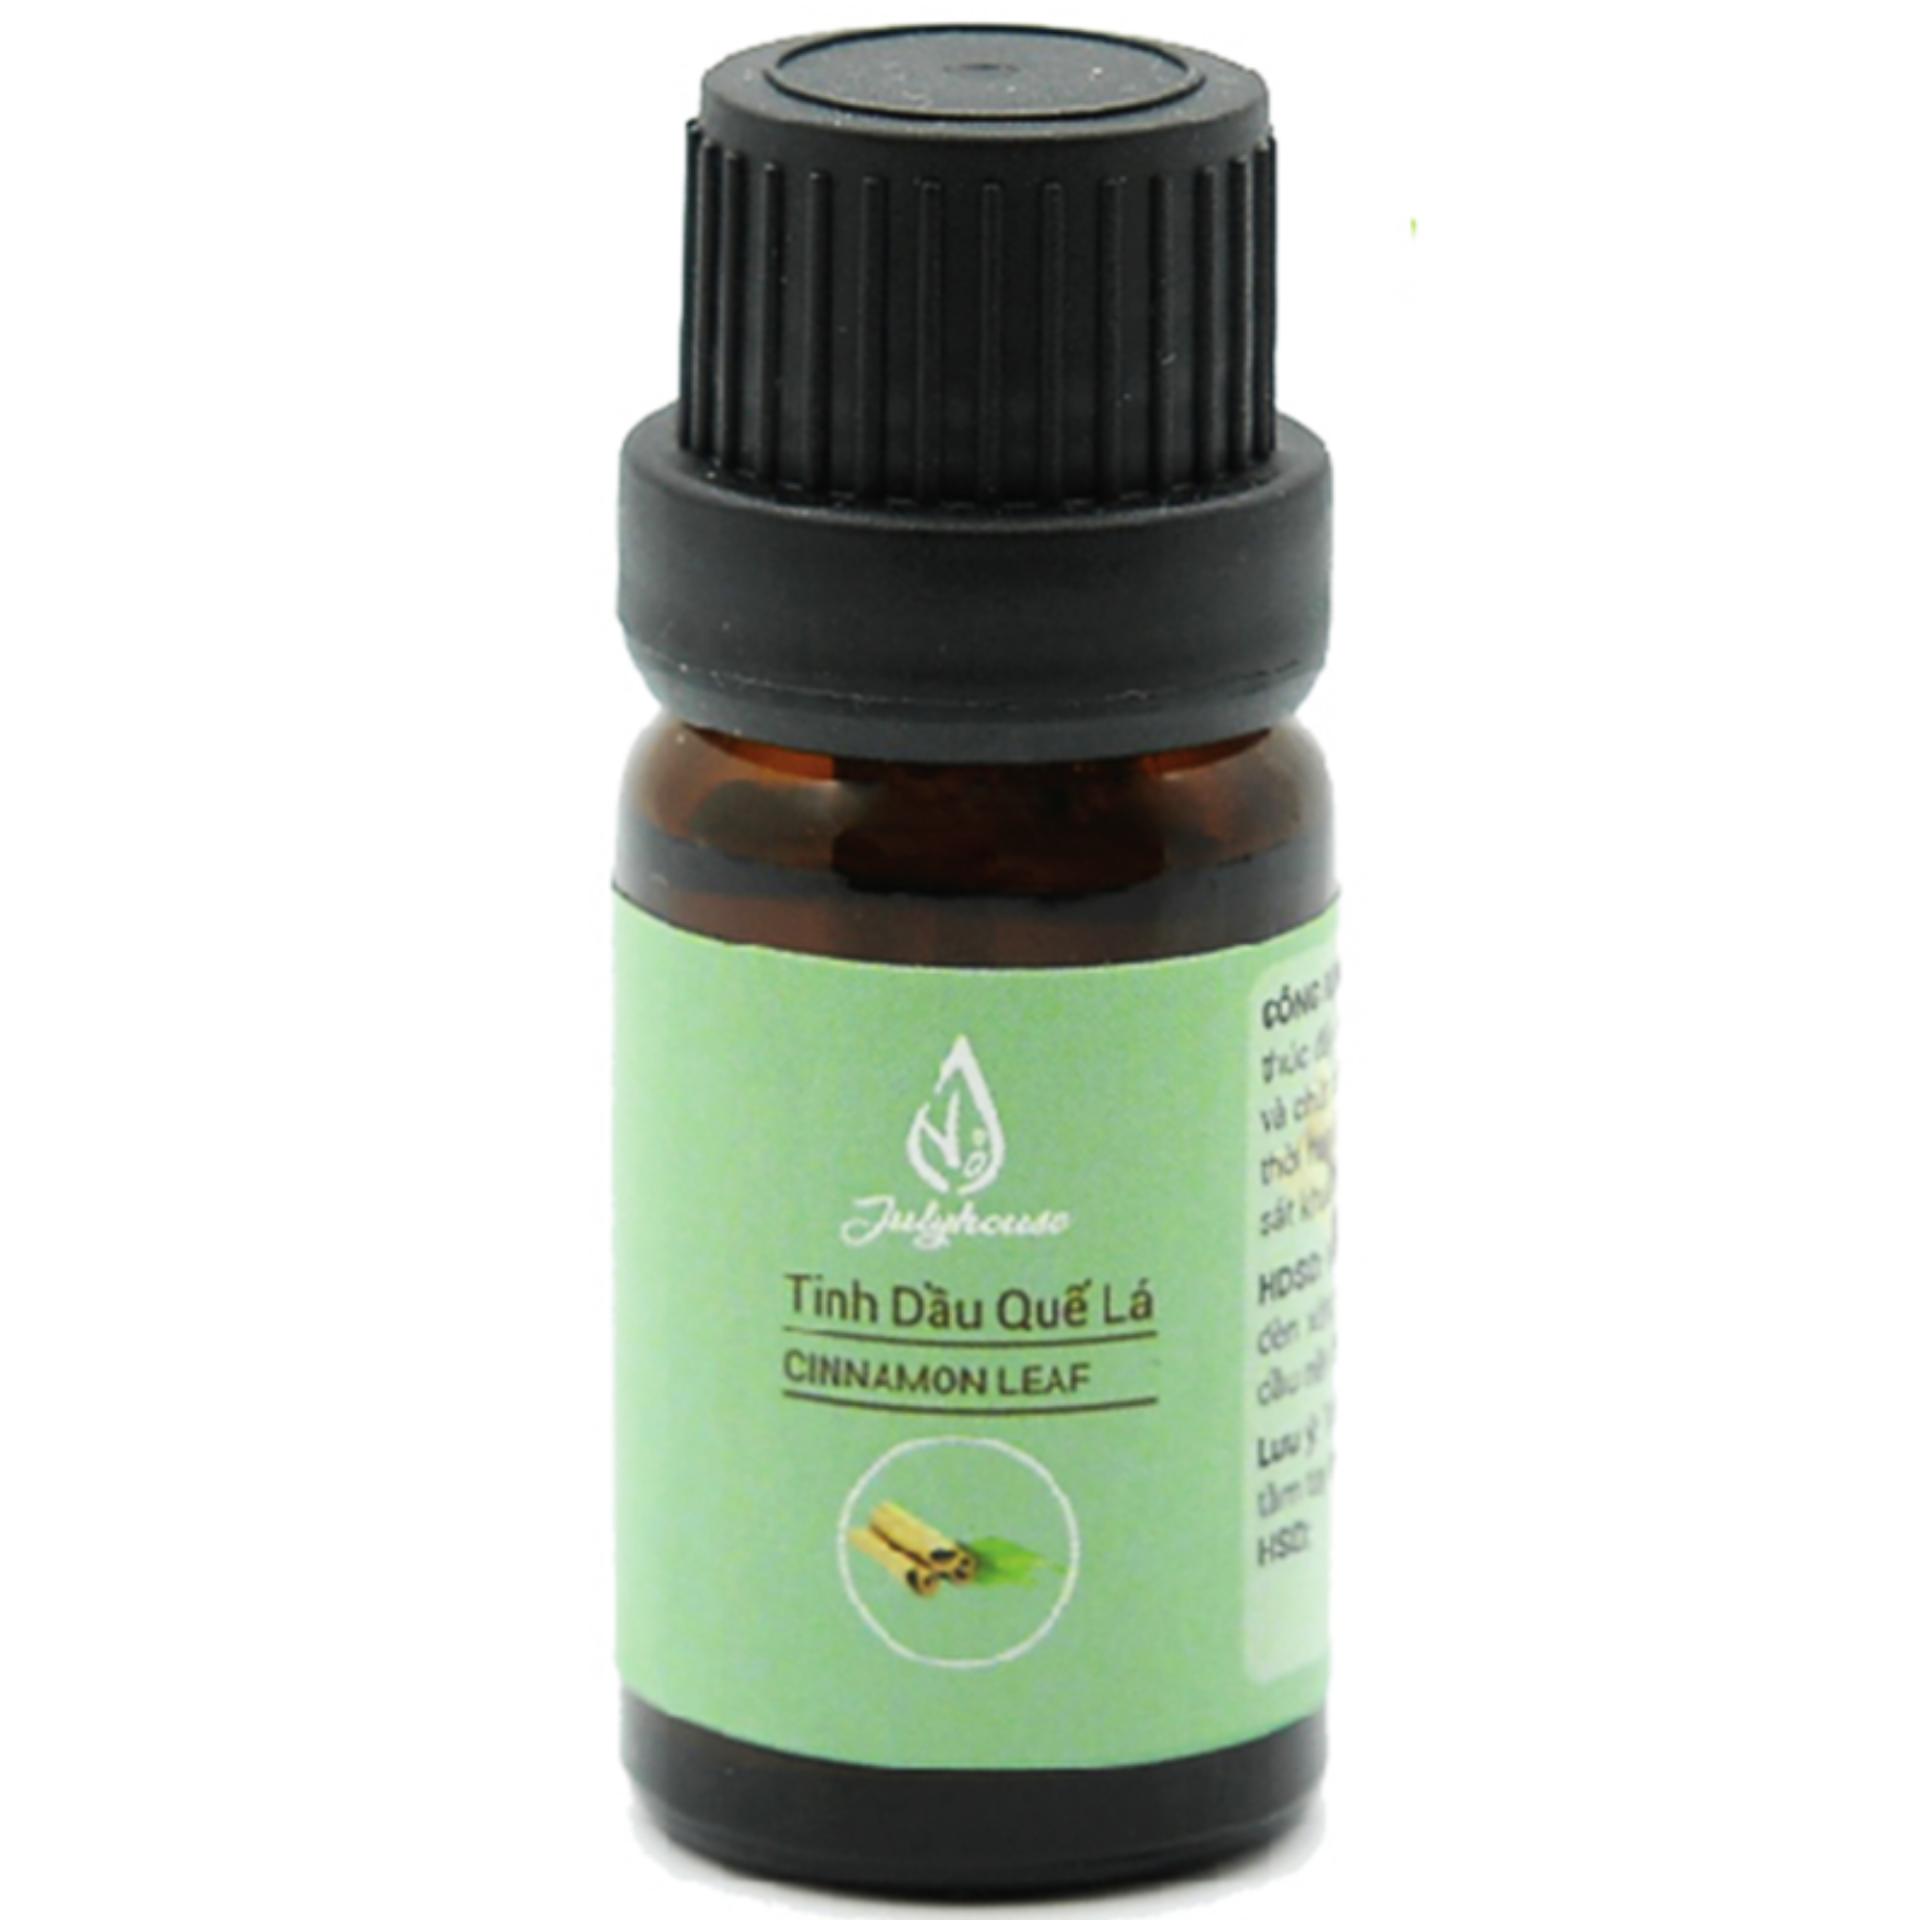 JULYHOUSE Cinnamon Massage Essential Oil 10ml - TTGT89